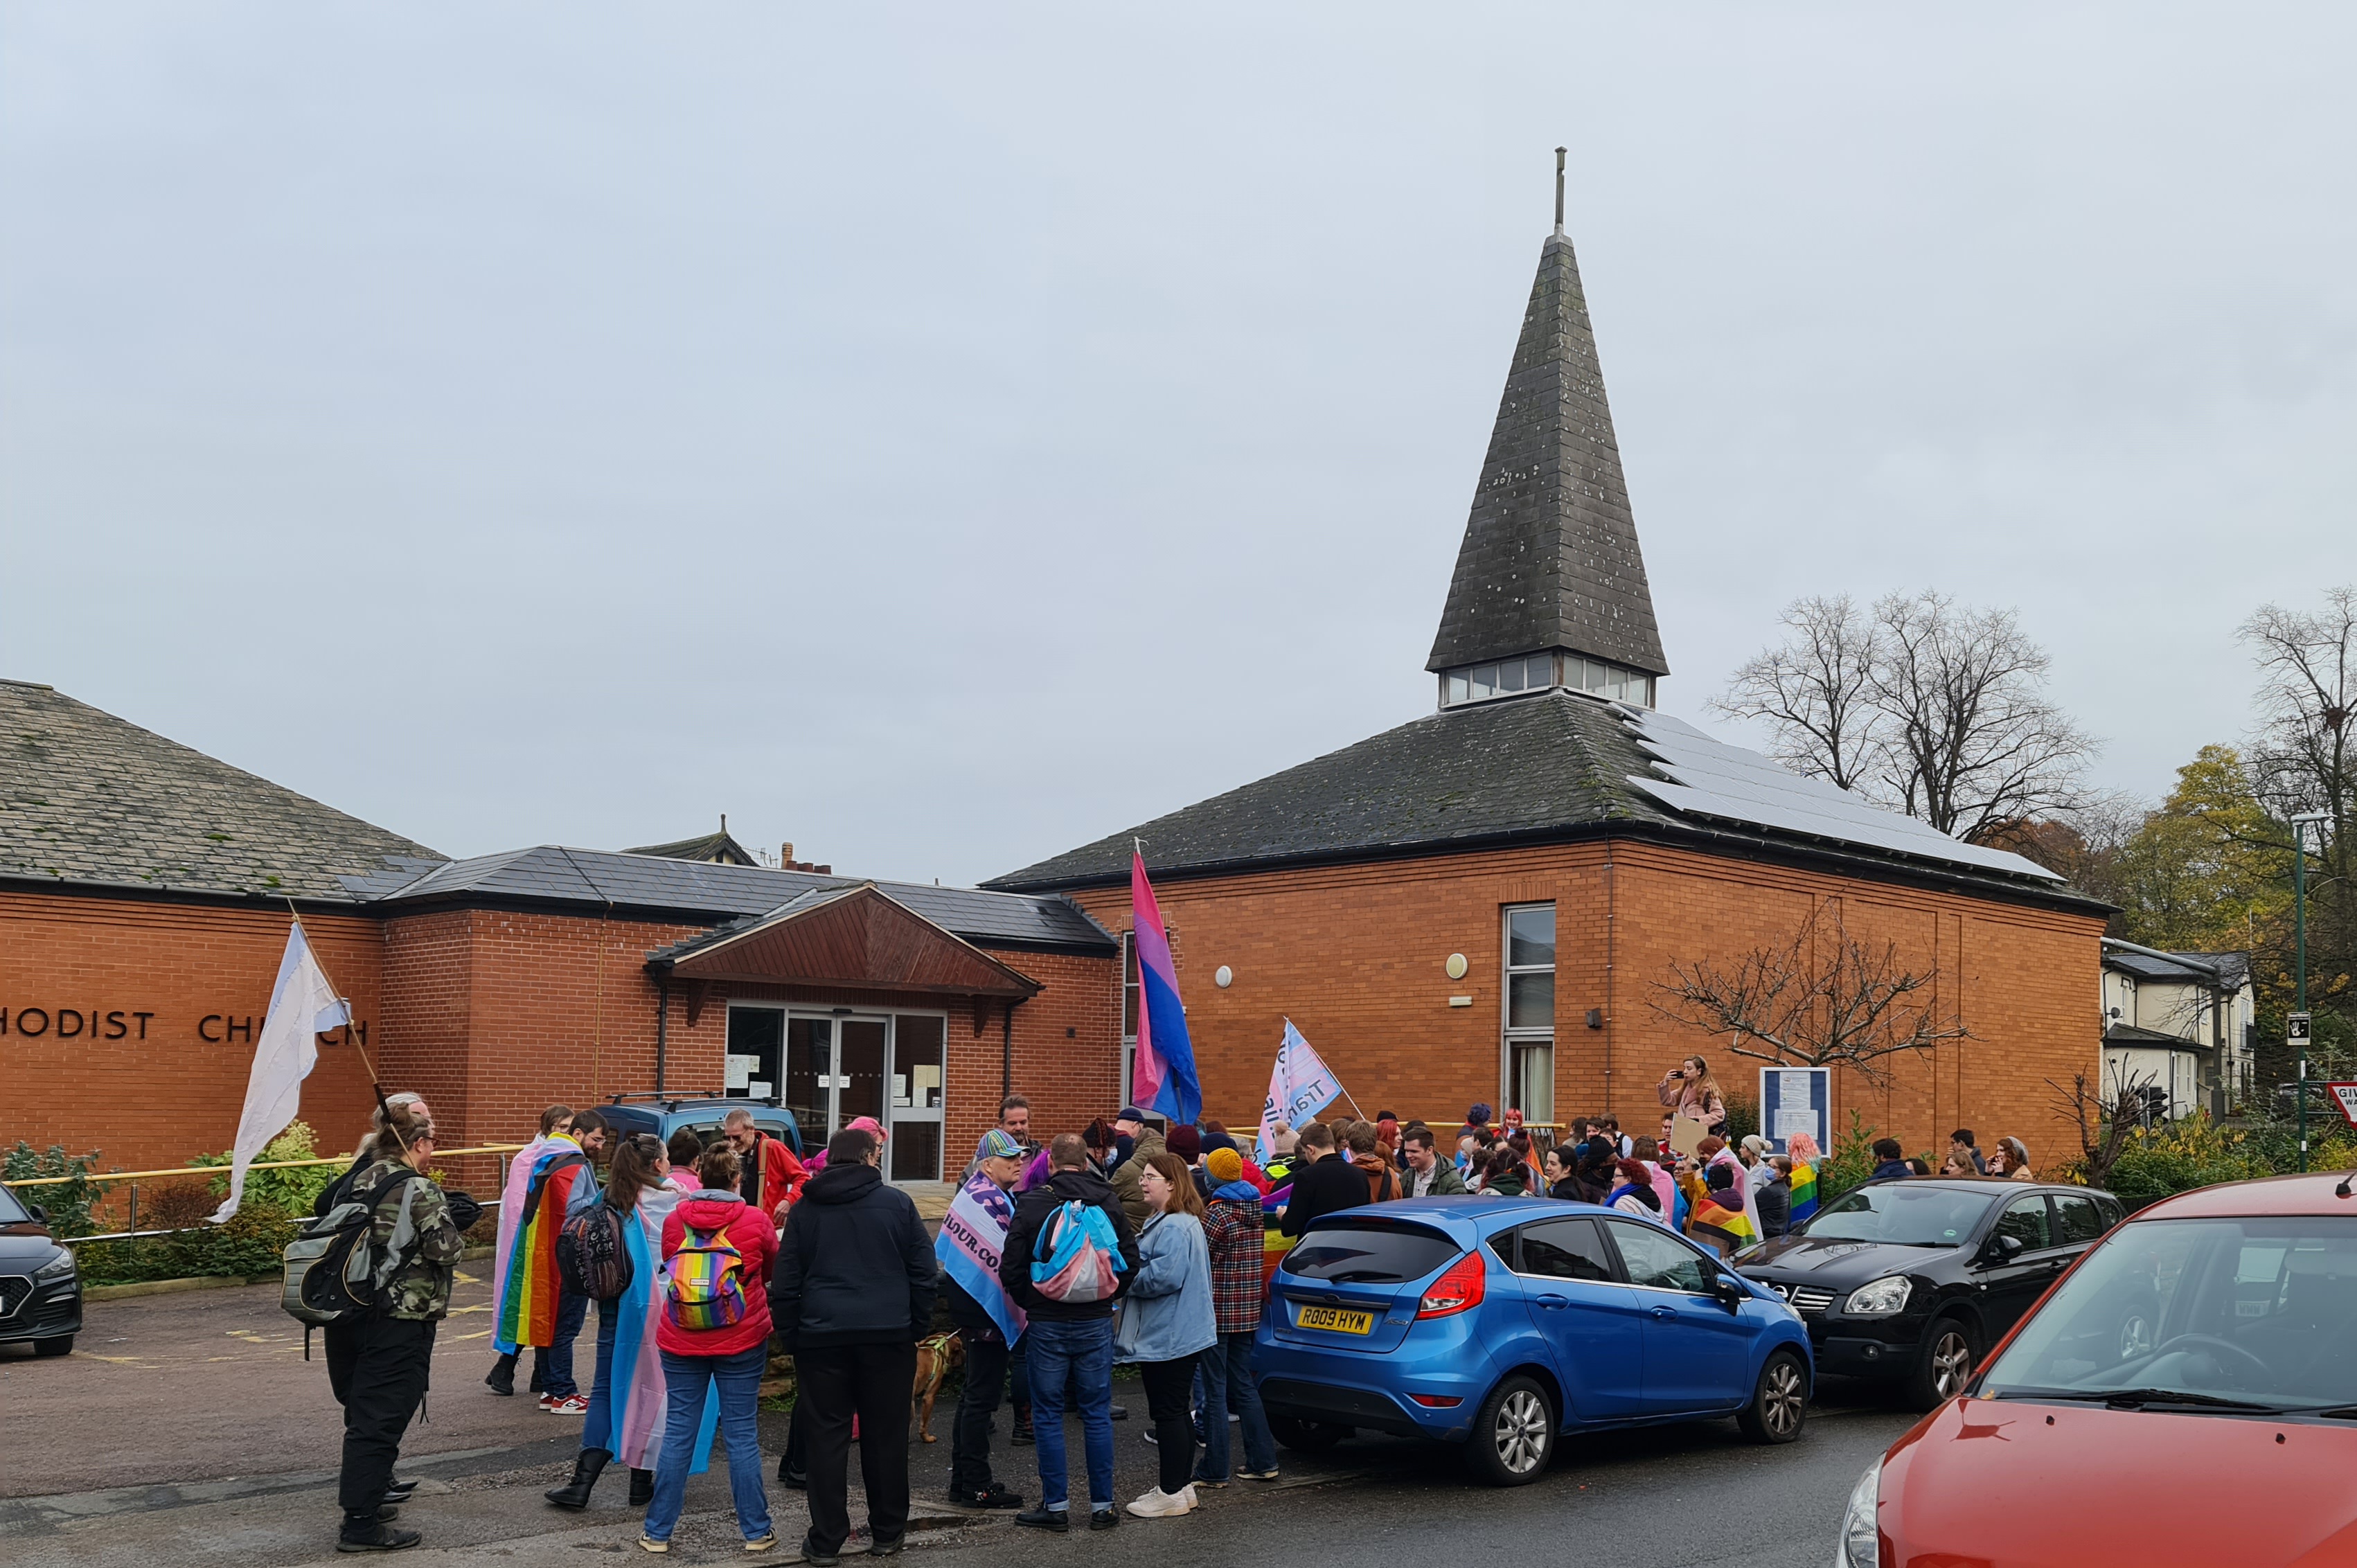 protestors gathered outside Sherwood Methodist Church